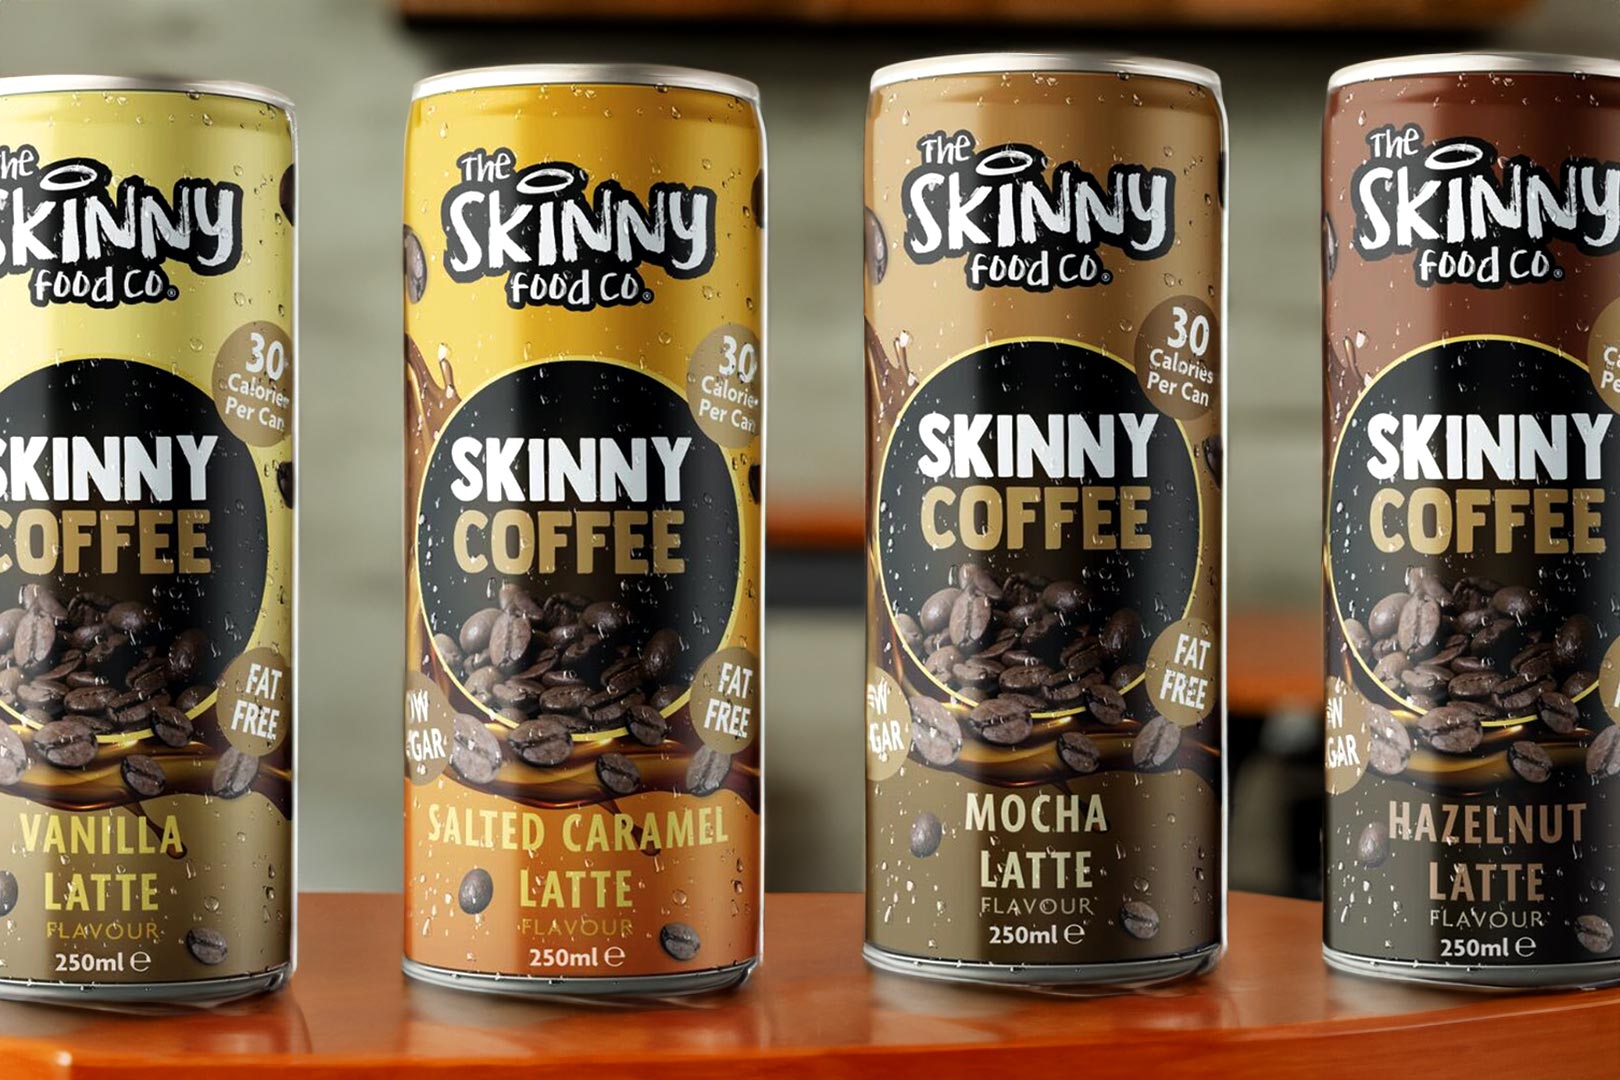 Skinny Food Co Skinny Coffee